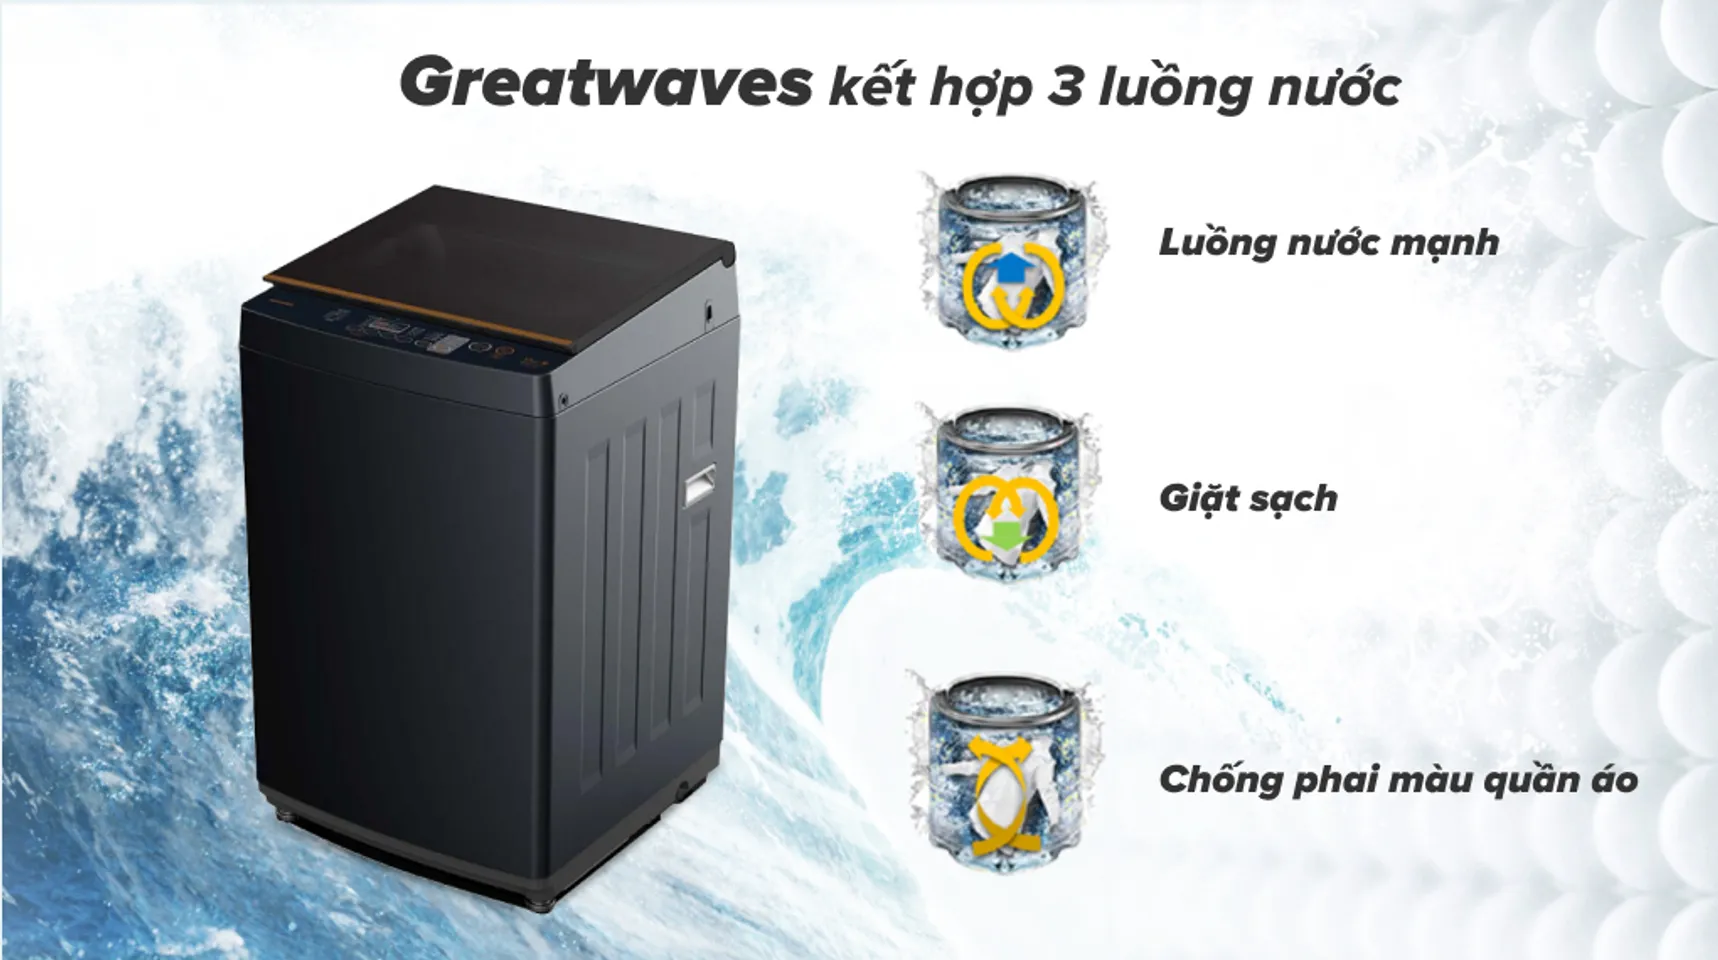 Máy giặt Toshiba Inverter 10 kg AW-DM1100PV(KK)  - Giặt kết hợp 3 luồng nước Greatwaves